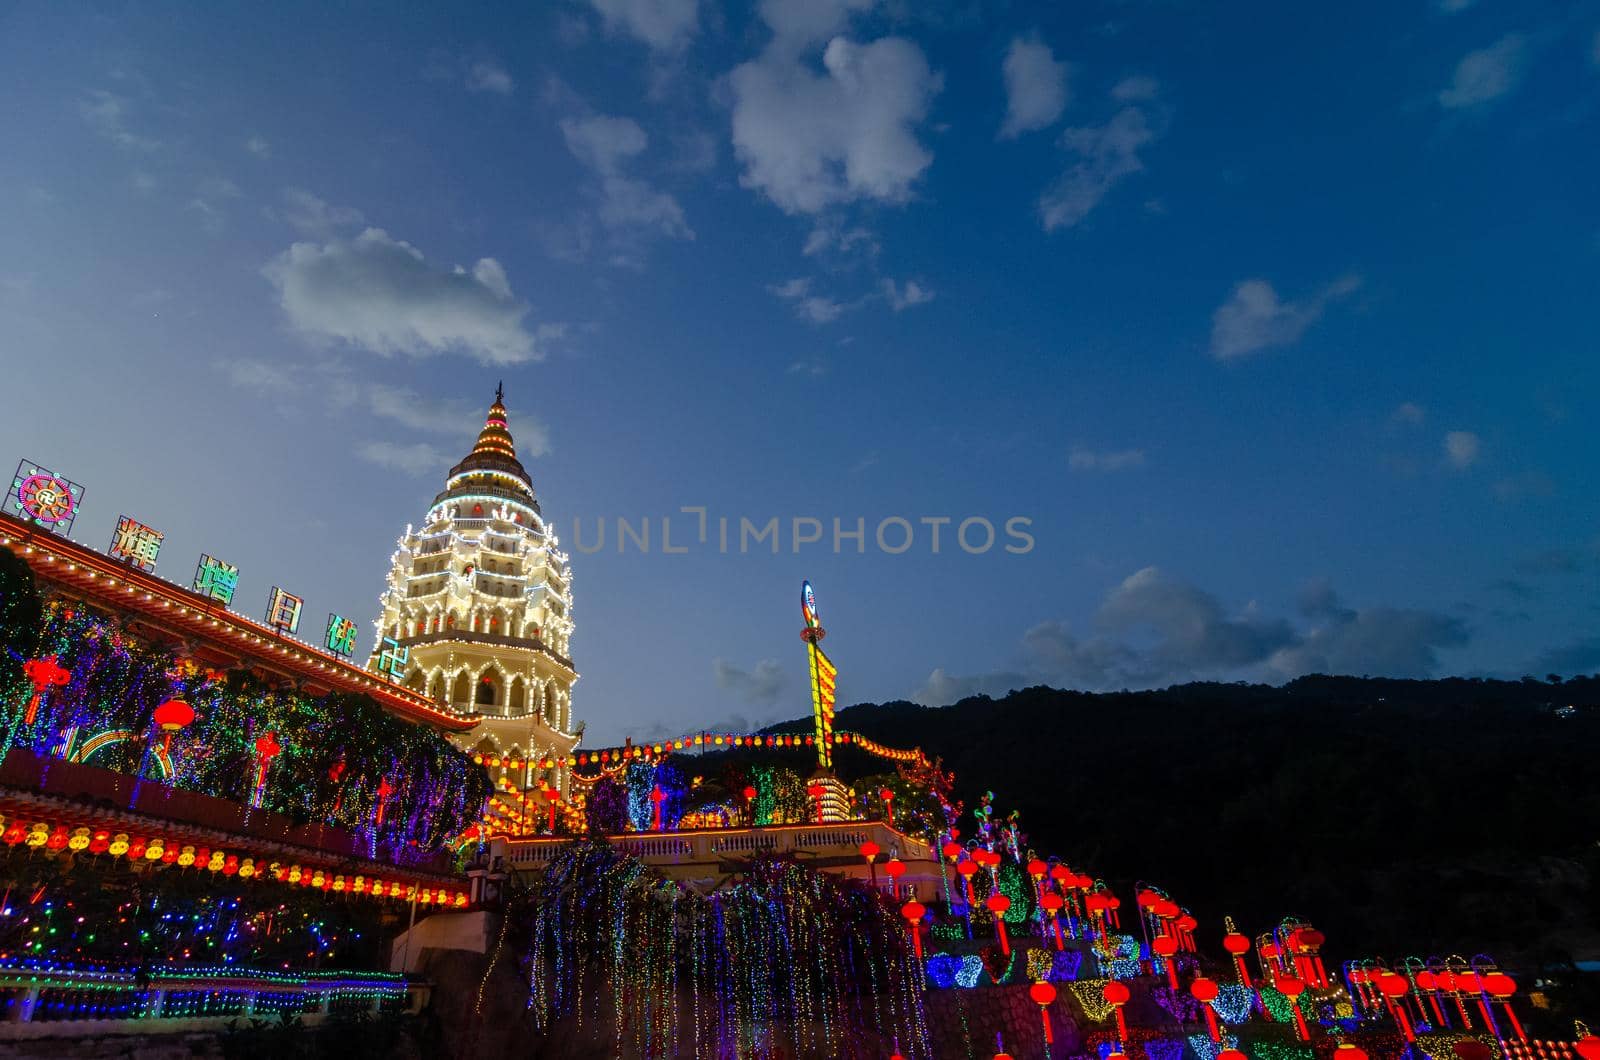 Georgetown, Penang/Malaysia - Feb 20 2020: Kek Lok Si temple light up under blue hour.